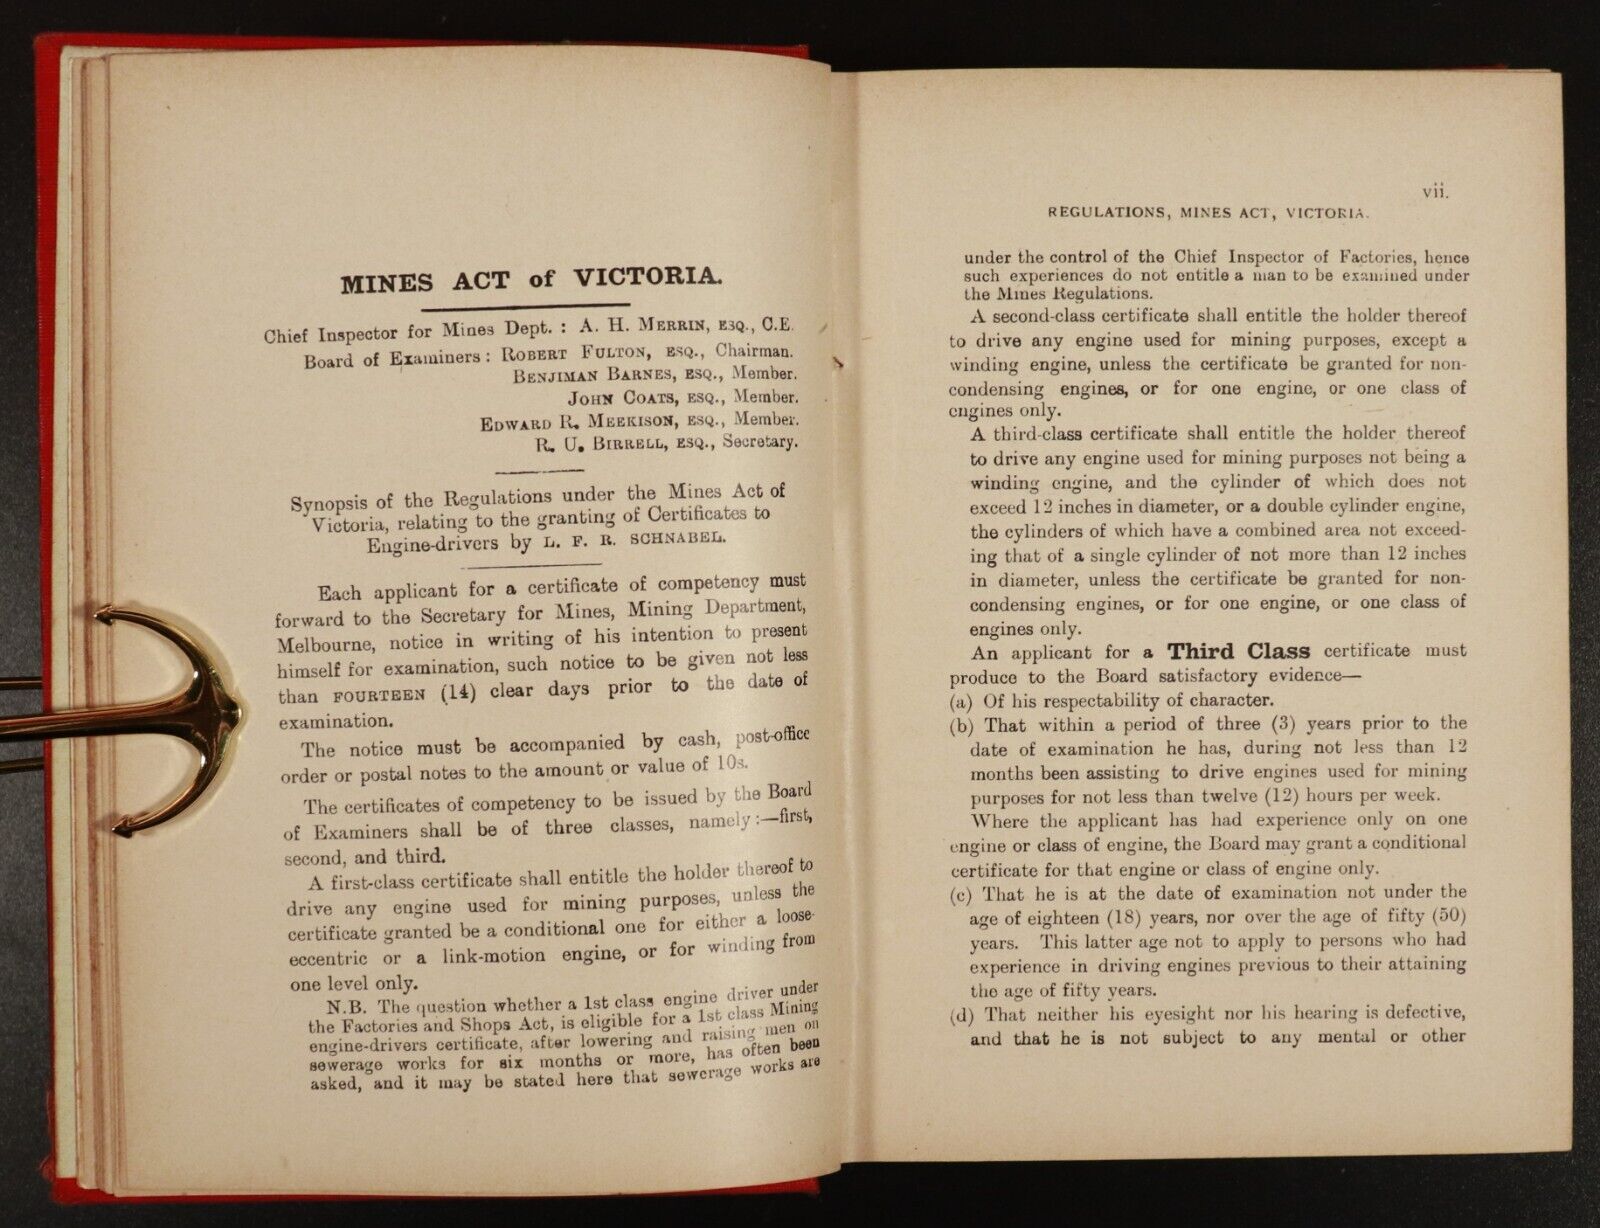 1914 The Engineman's Master Key Australian Steam Industry Train History Book